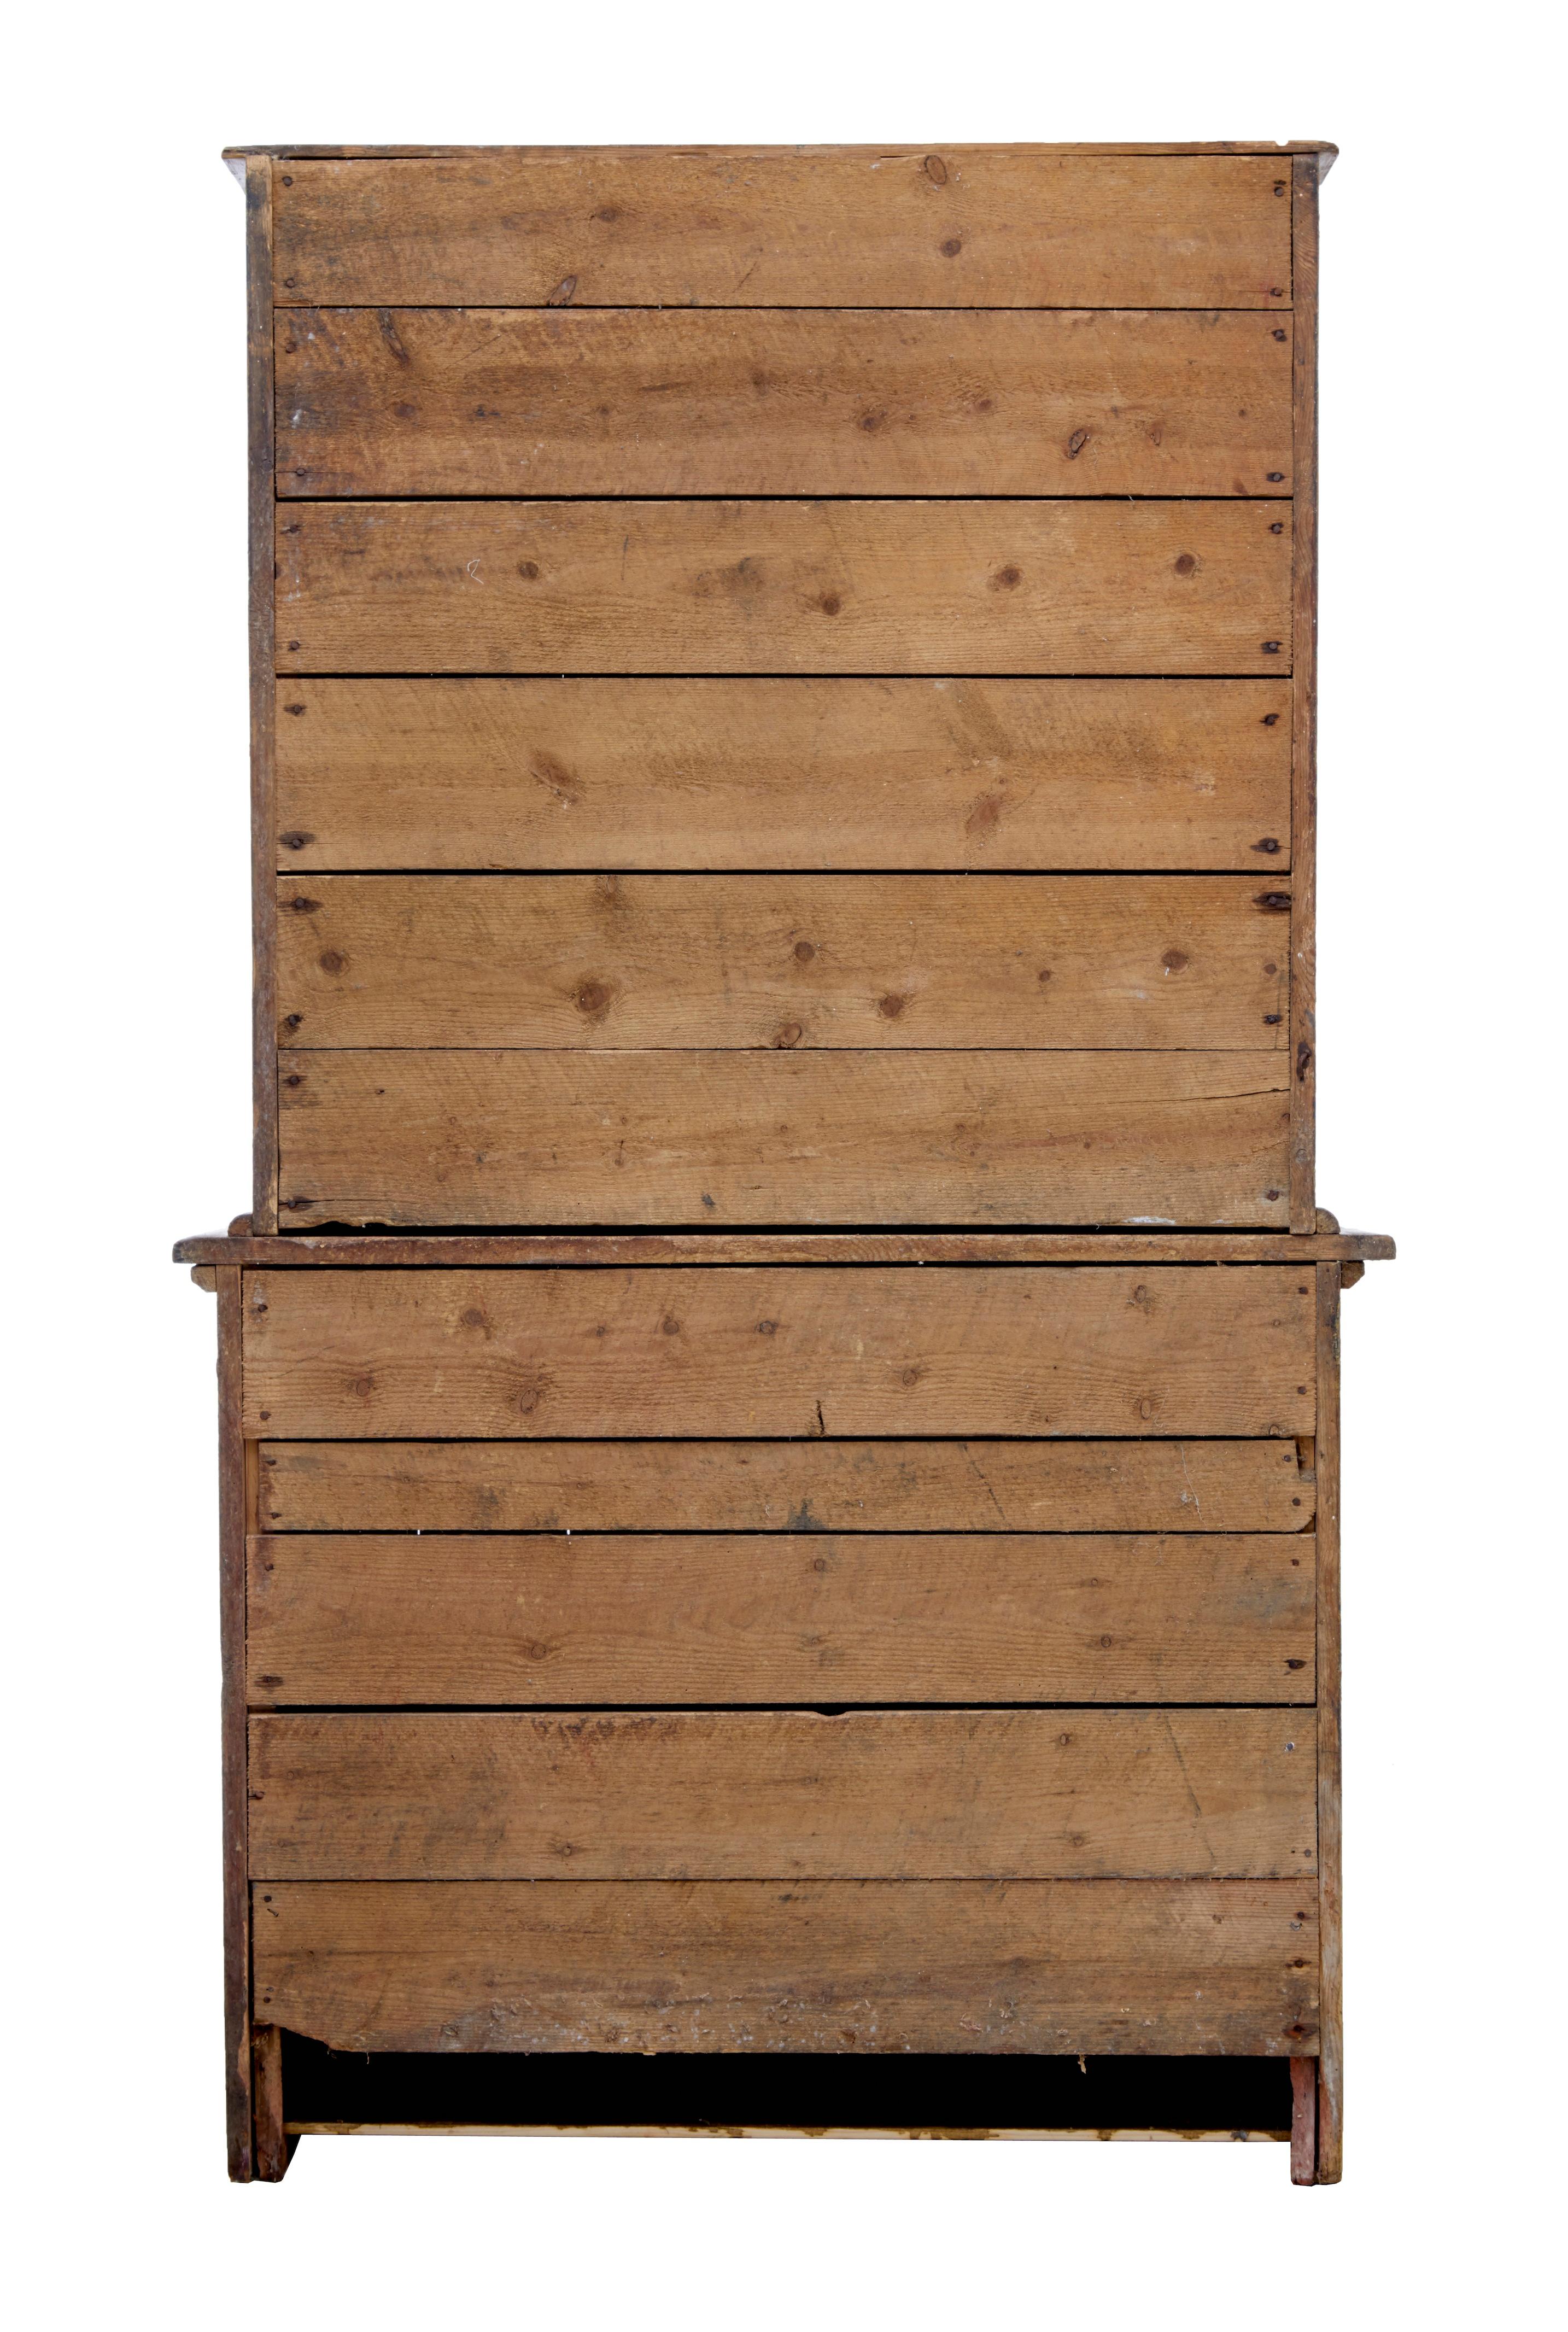 19th Century Rustic Swedish Pine Painted Kitchen Cupboard 2